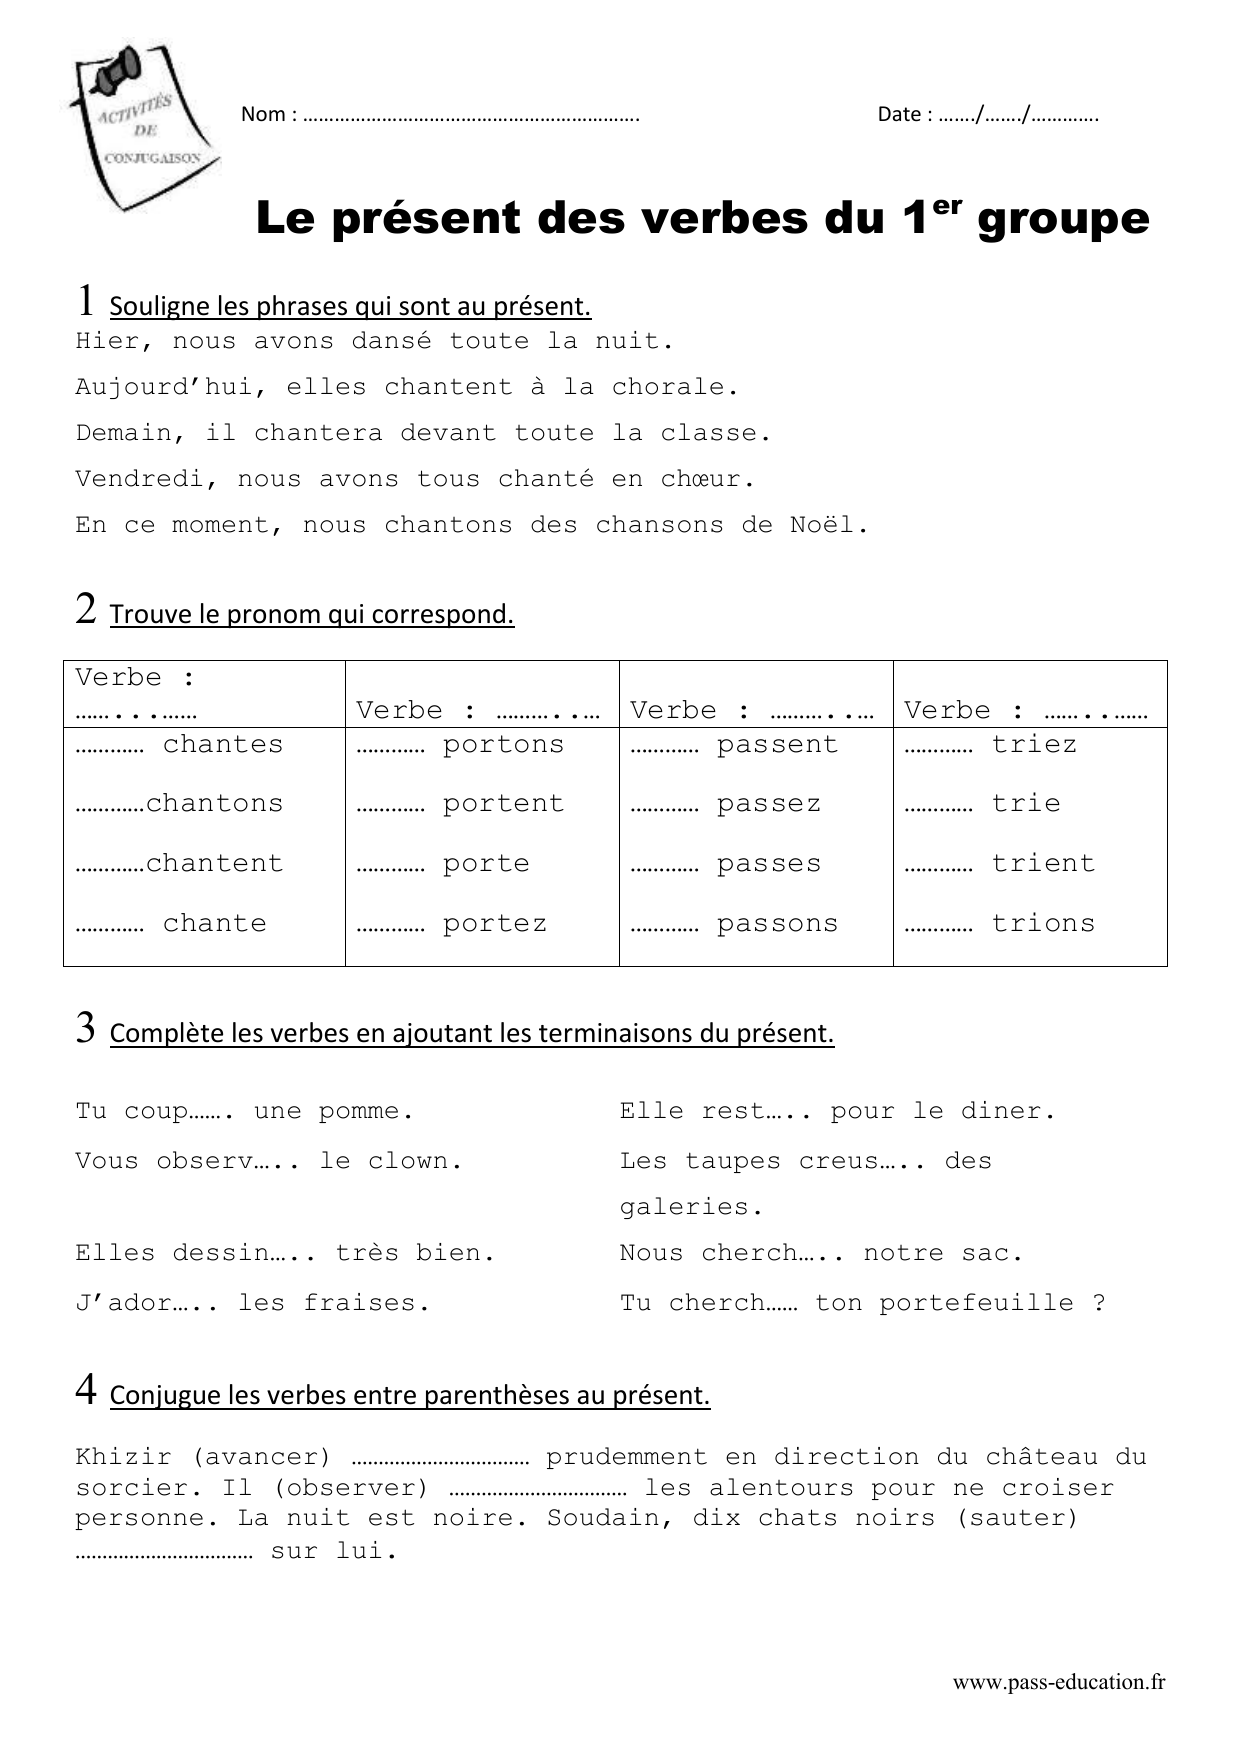 Present Des Verbes Du 1er Groupe Ce1 Exercices